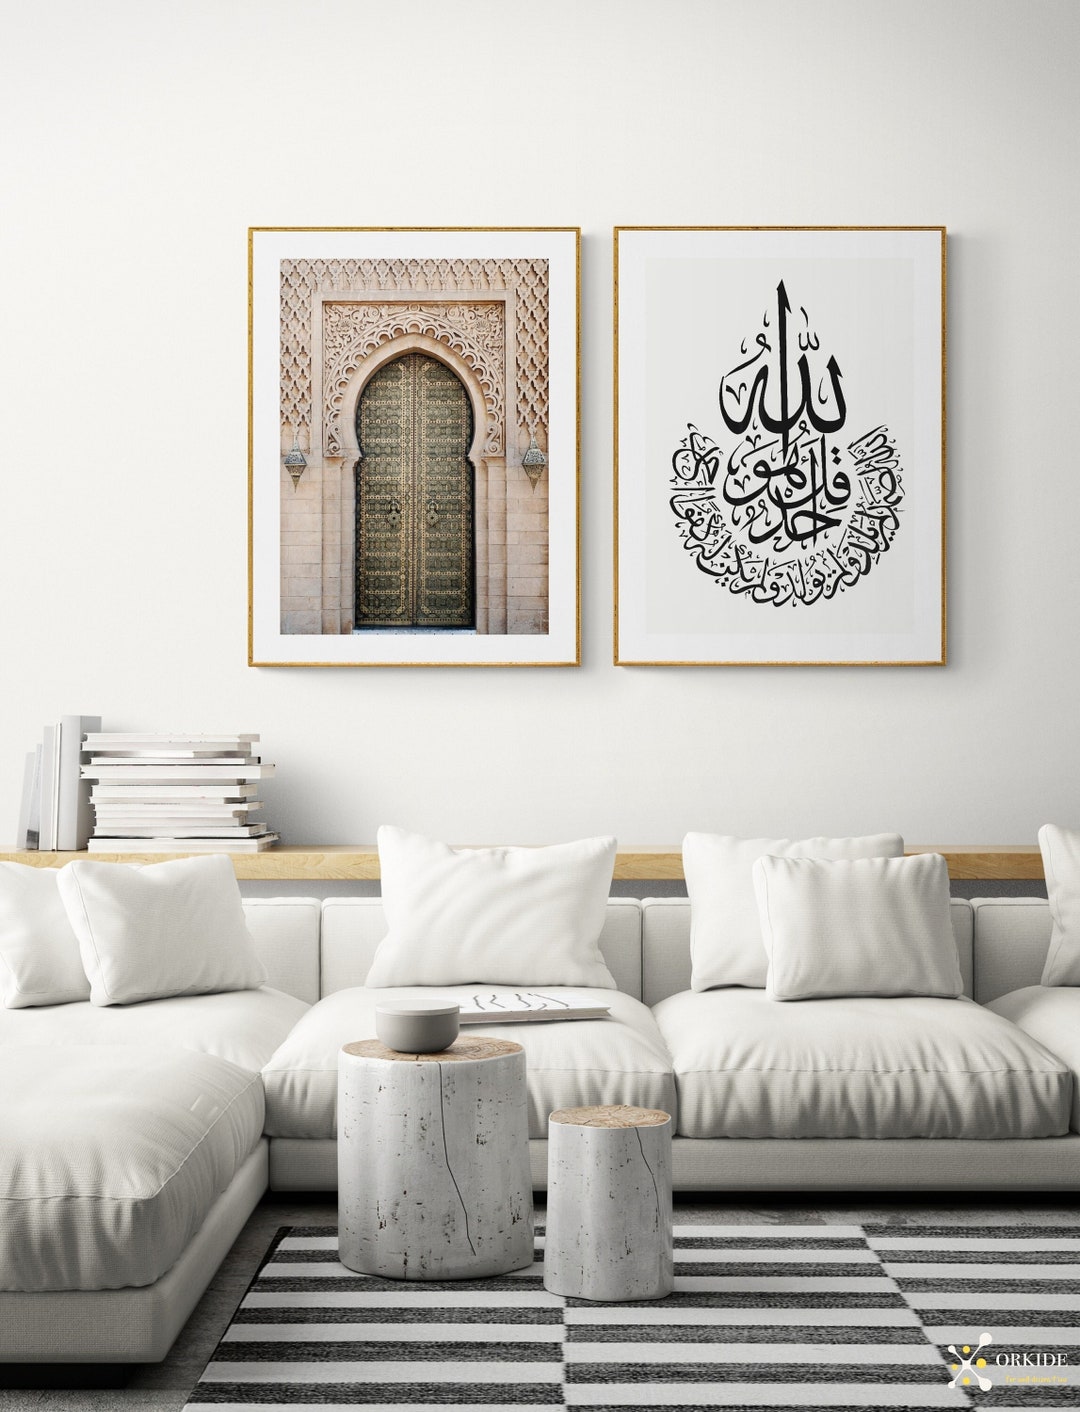 Gateway to Arabic Handwriting Book - The Islamic Place